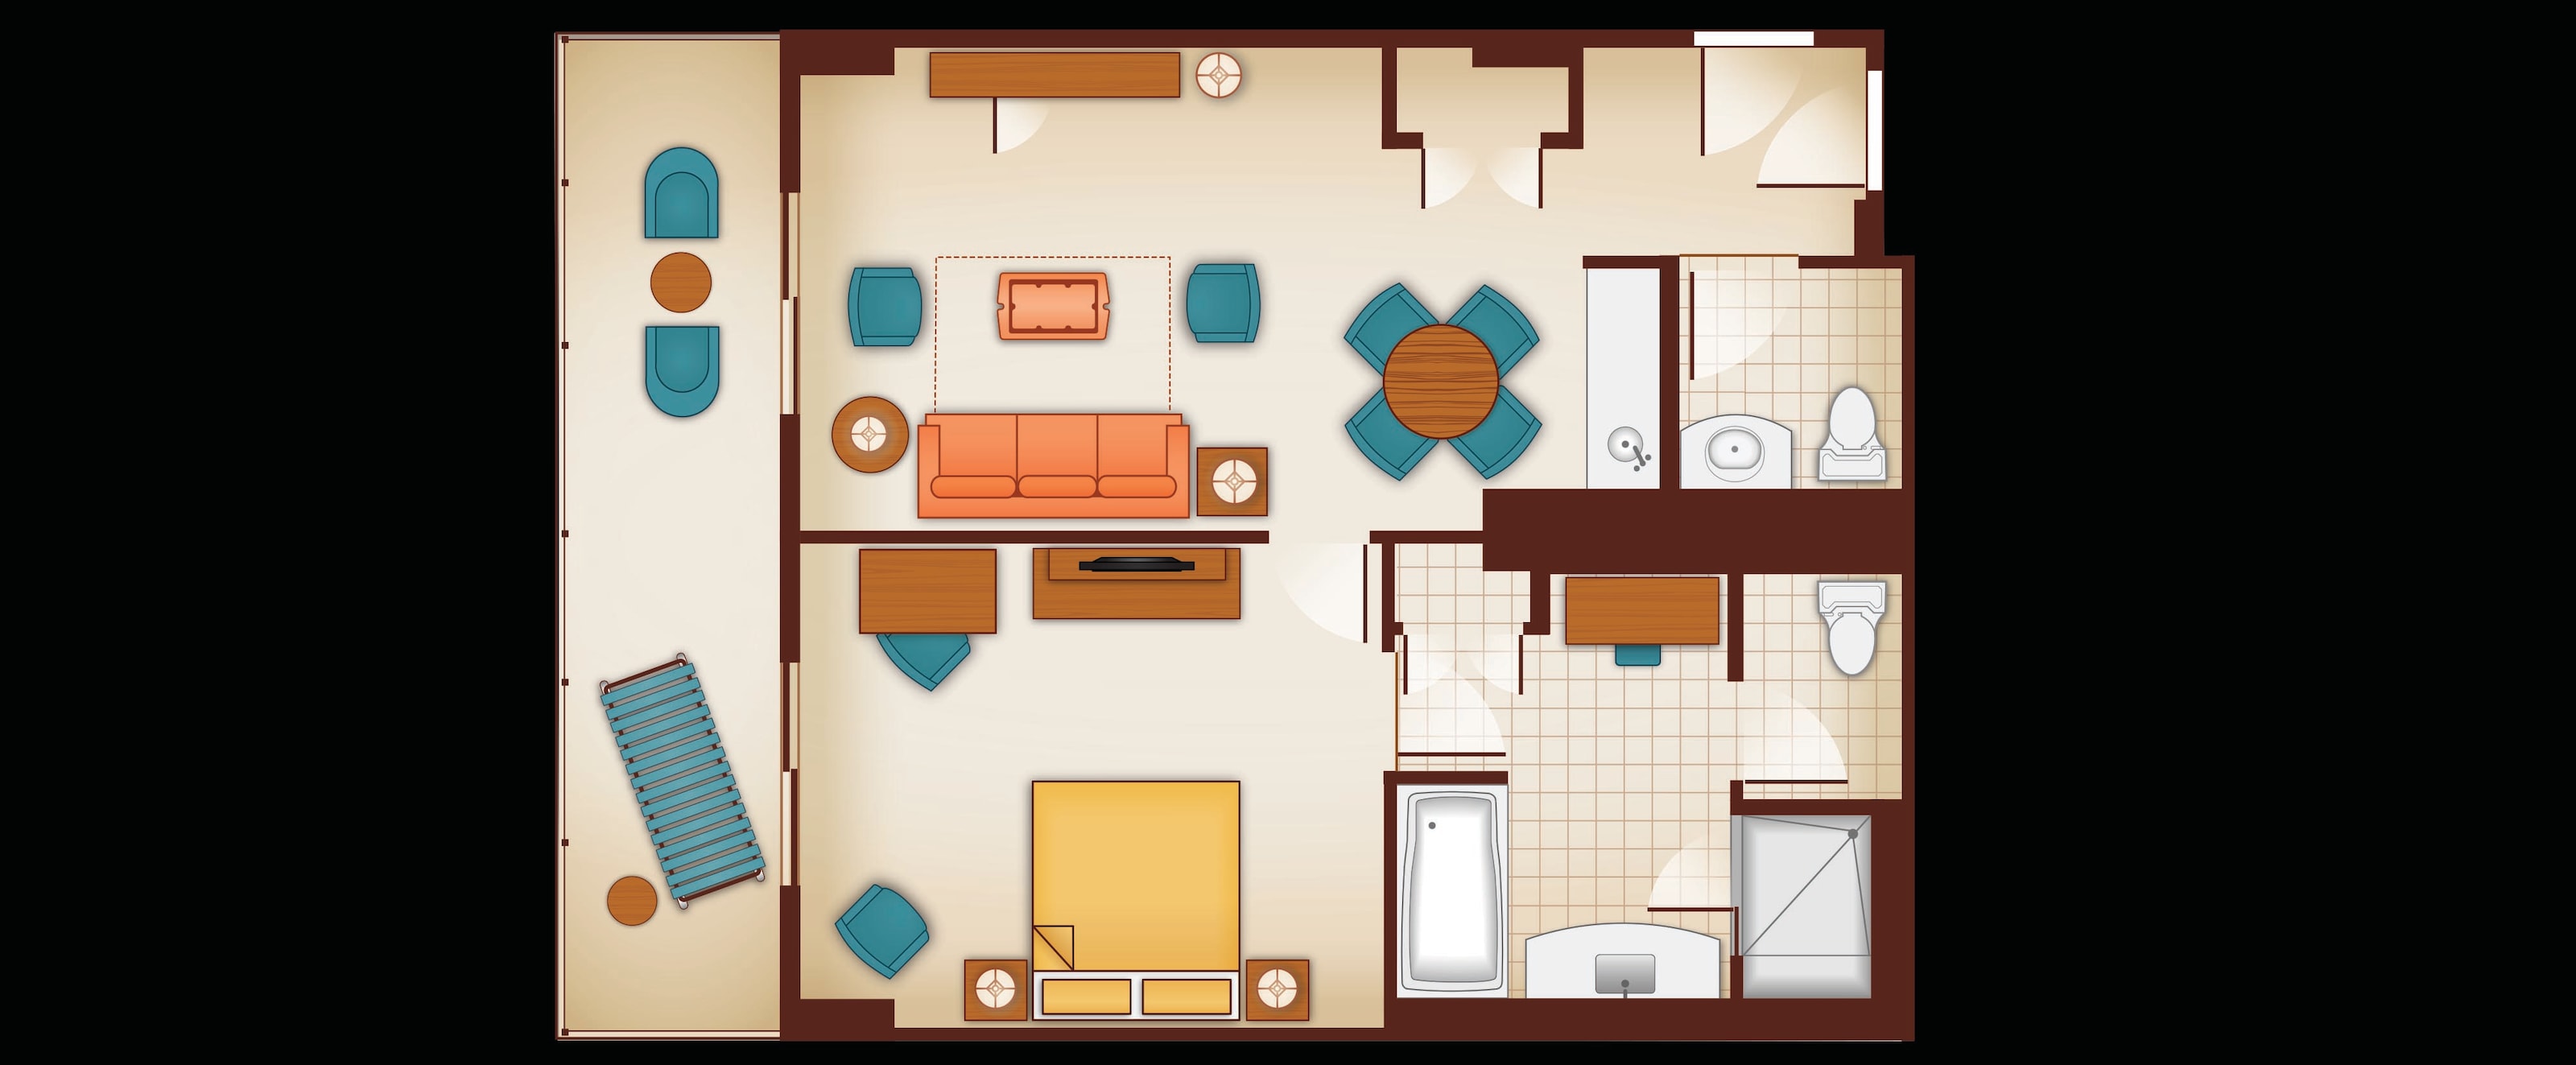 Aulani Rooms Floor Plans 1bedroom Parlor Suite G 